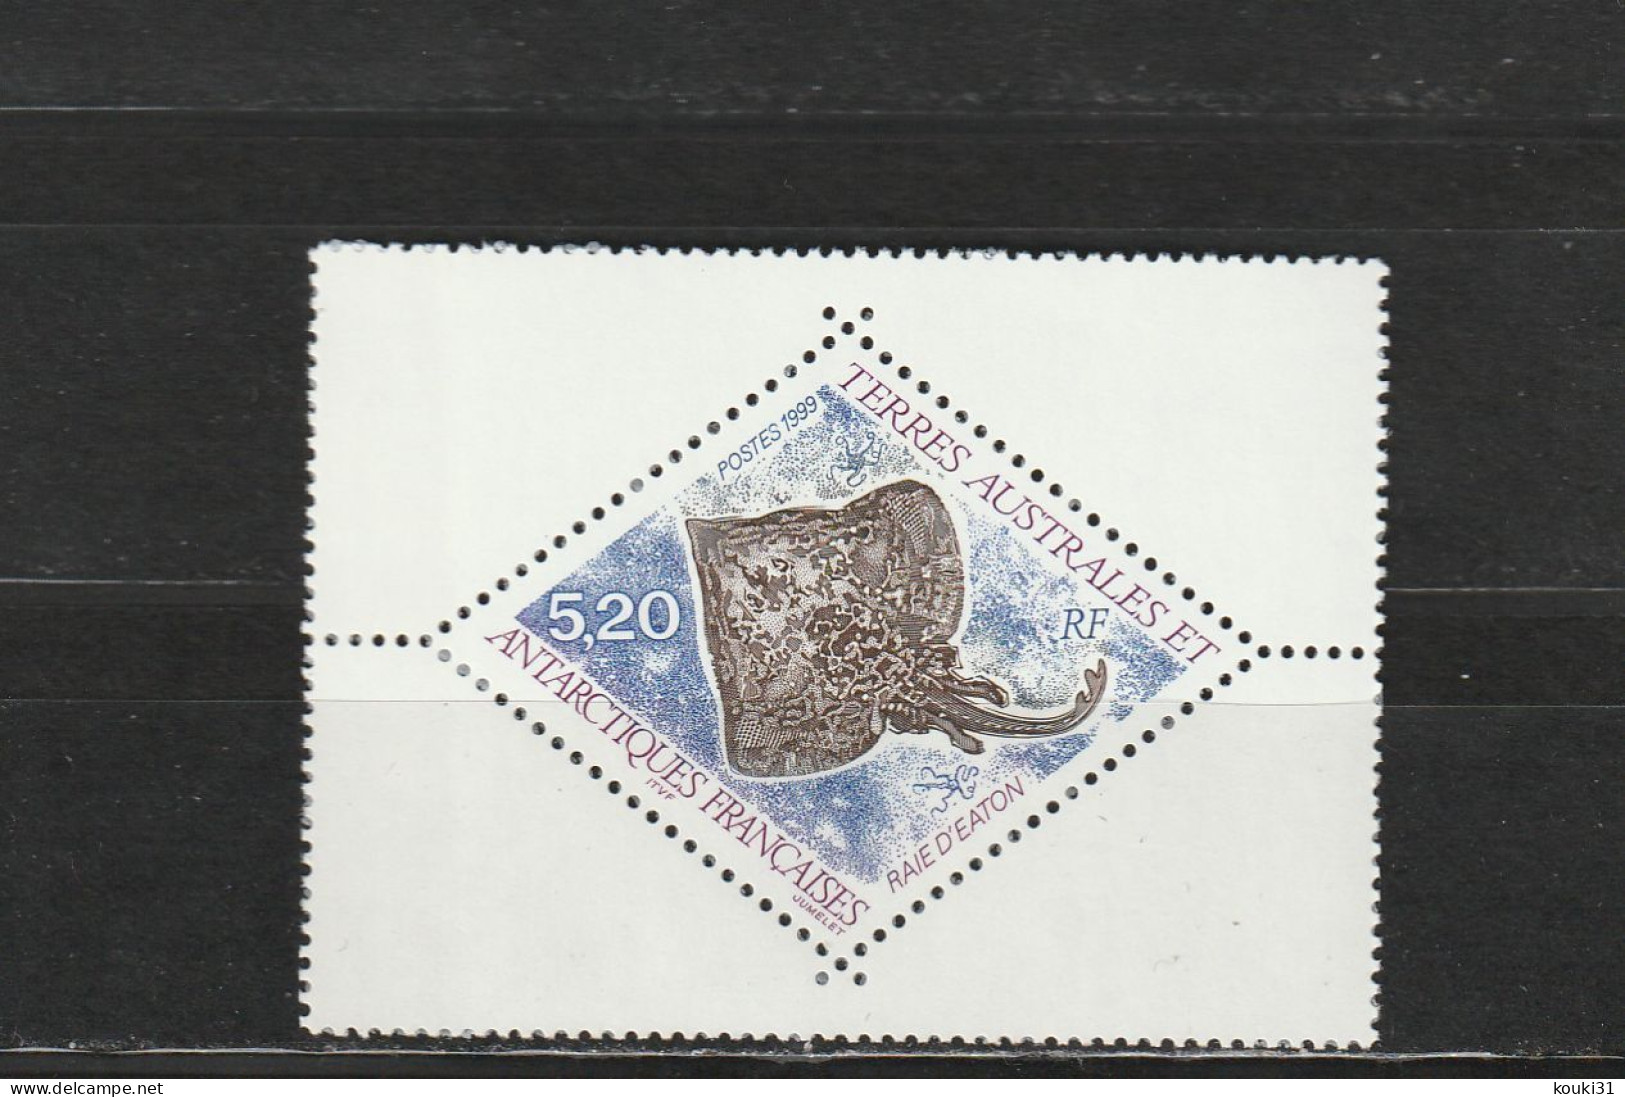 TAAF YT 240 ** : Raie D'Eaton - 1999 - Unused Stamps